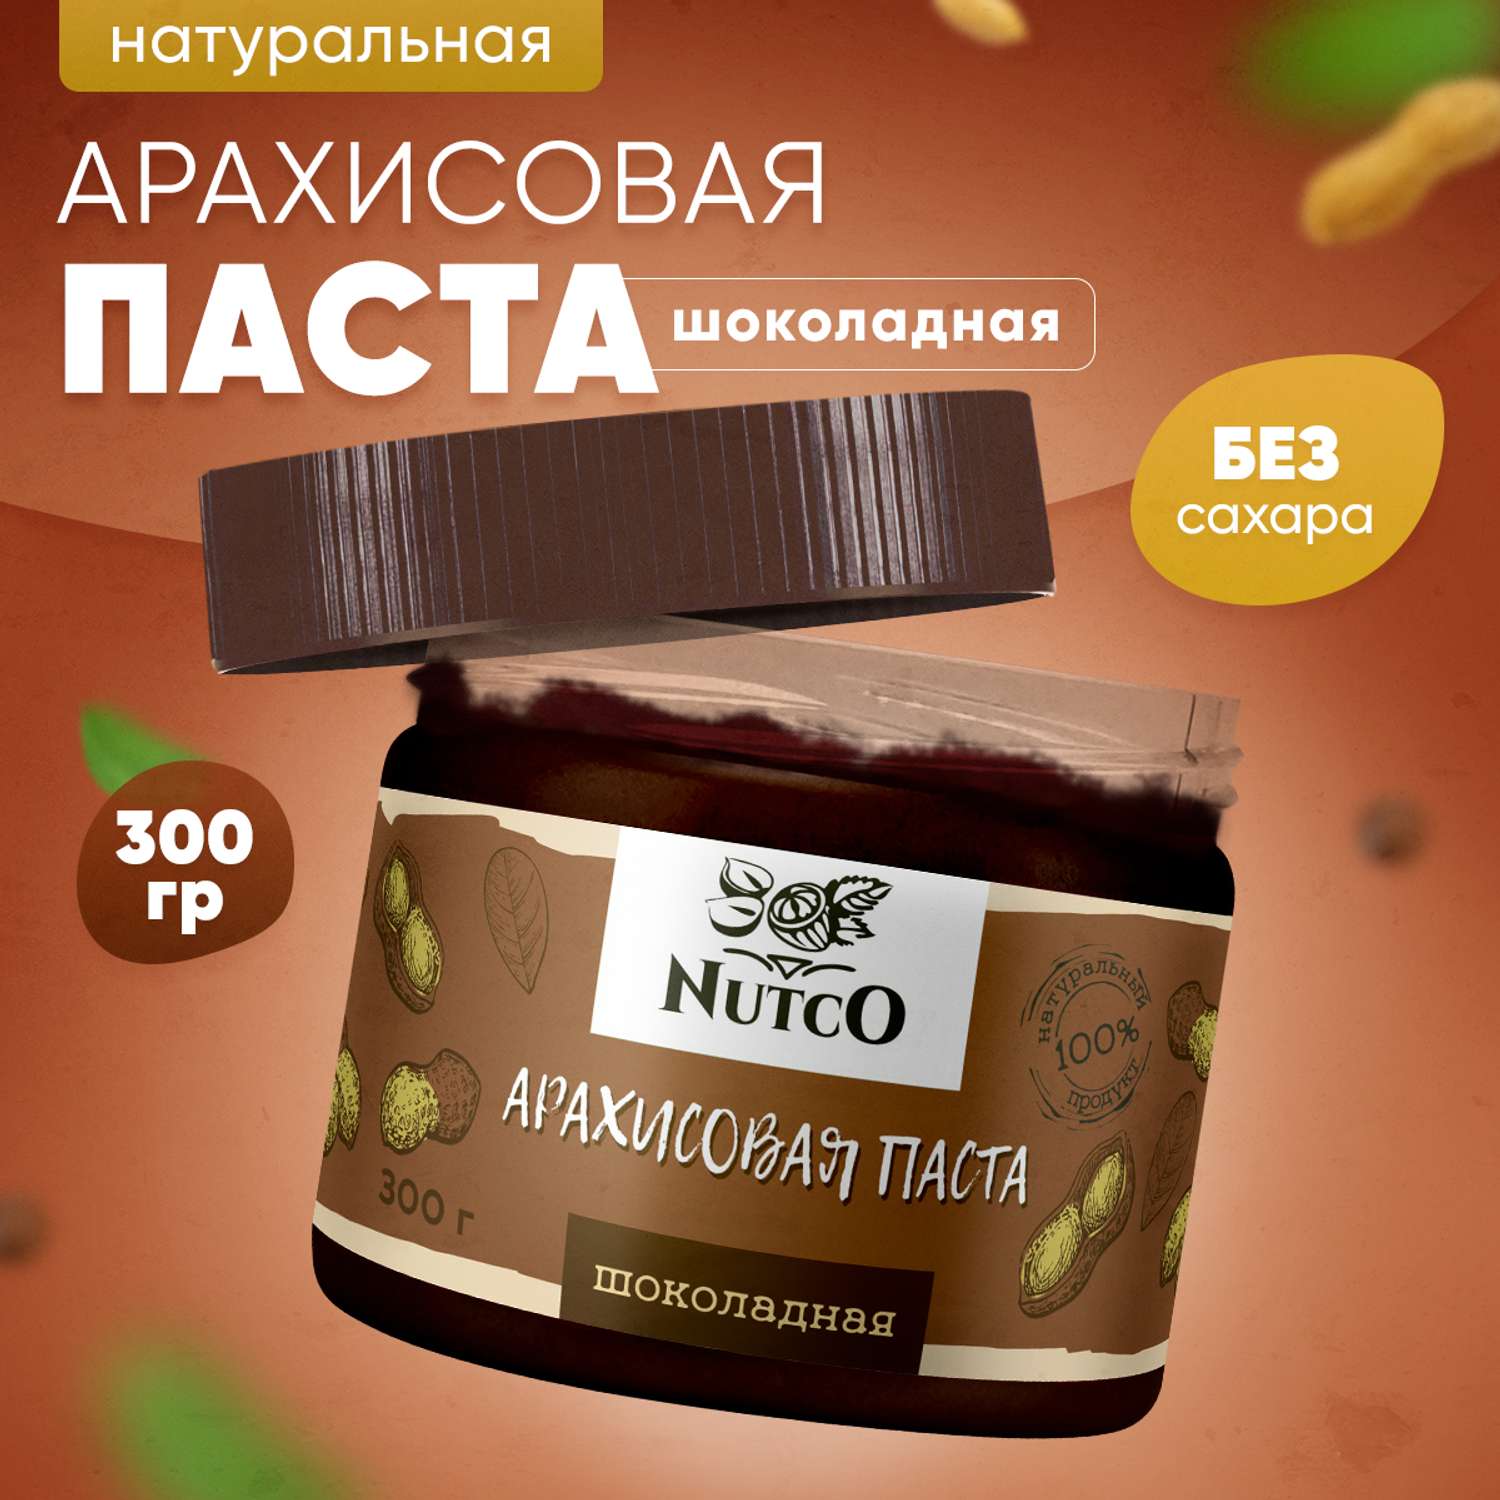 Арахисовая паста Nutco шоколадная без сахара - фото 1